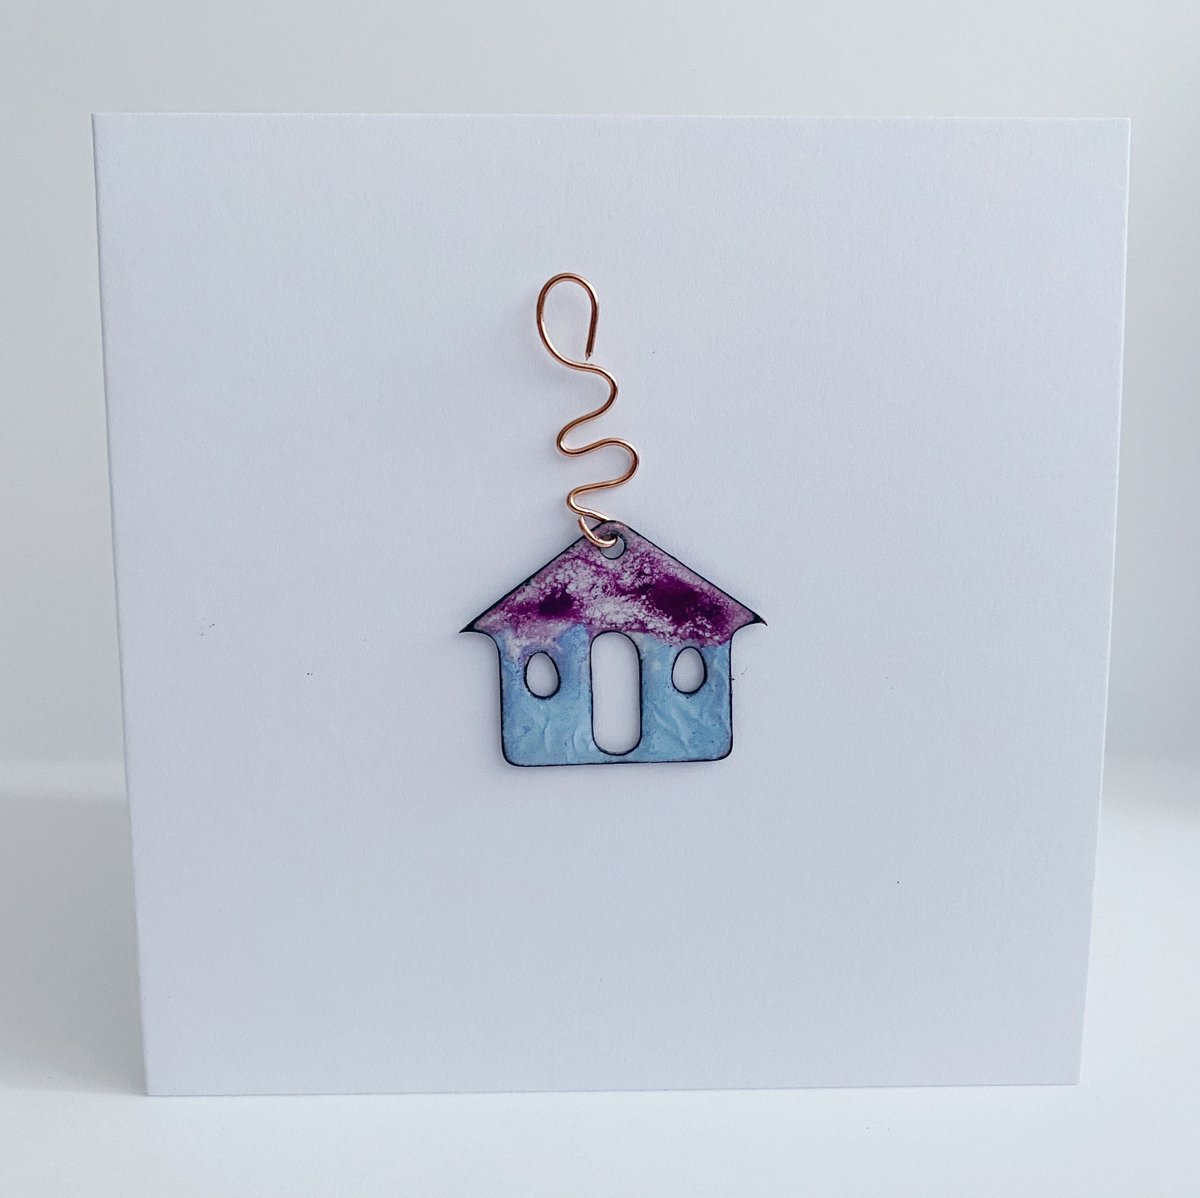 New Home Greetings Card, Moving House Card maisyplum.etsy.com/listing/858292… #ShopIndie #Etsy #MyNewTag #MHHSBD #MaisyPlum #UKCraftersHour #FeelGoodCard